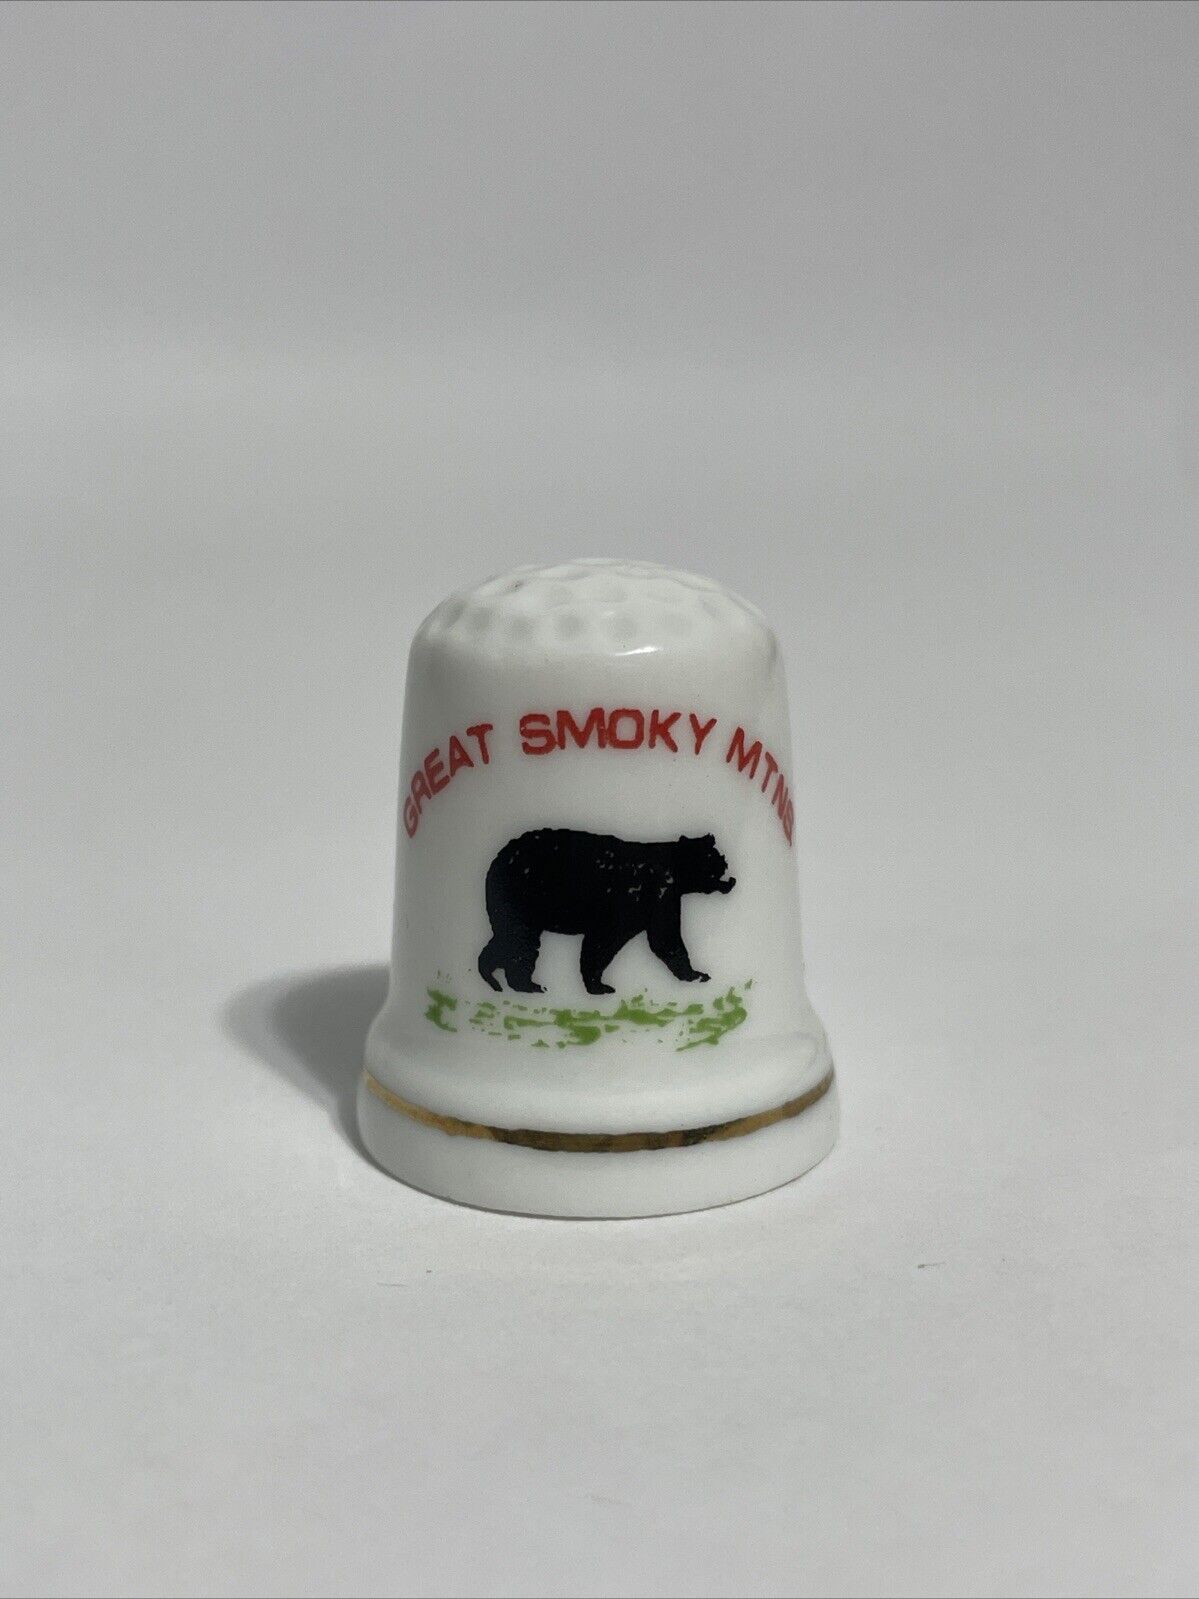 Vintage Great Smoky Mtns. Thimble, Ceramic, Gold Rim